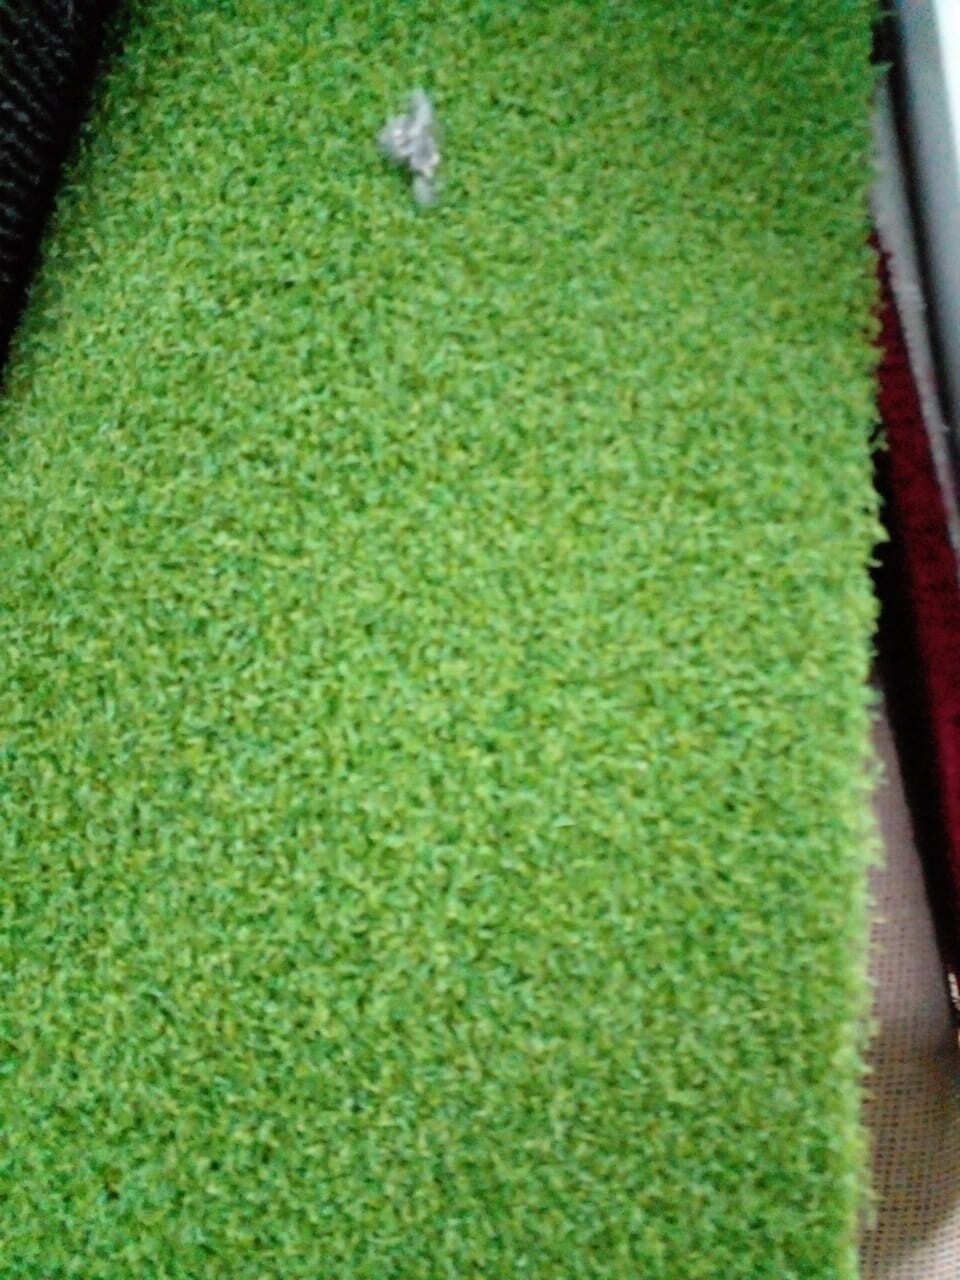 Outdoor carpet per square metre, artificial grass carpet